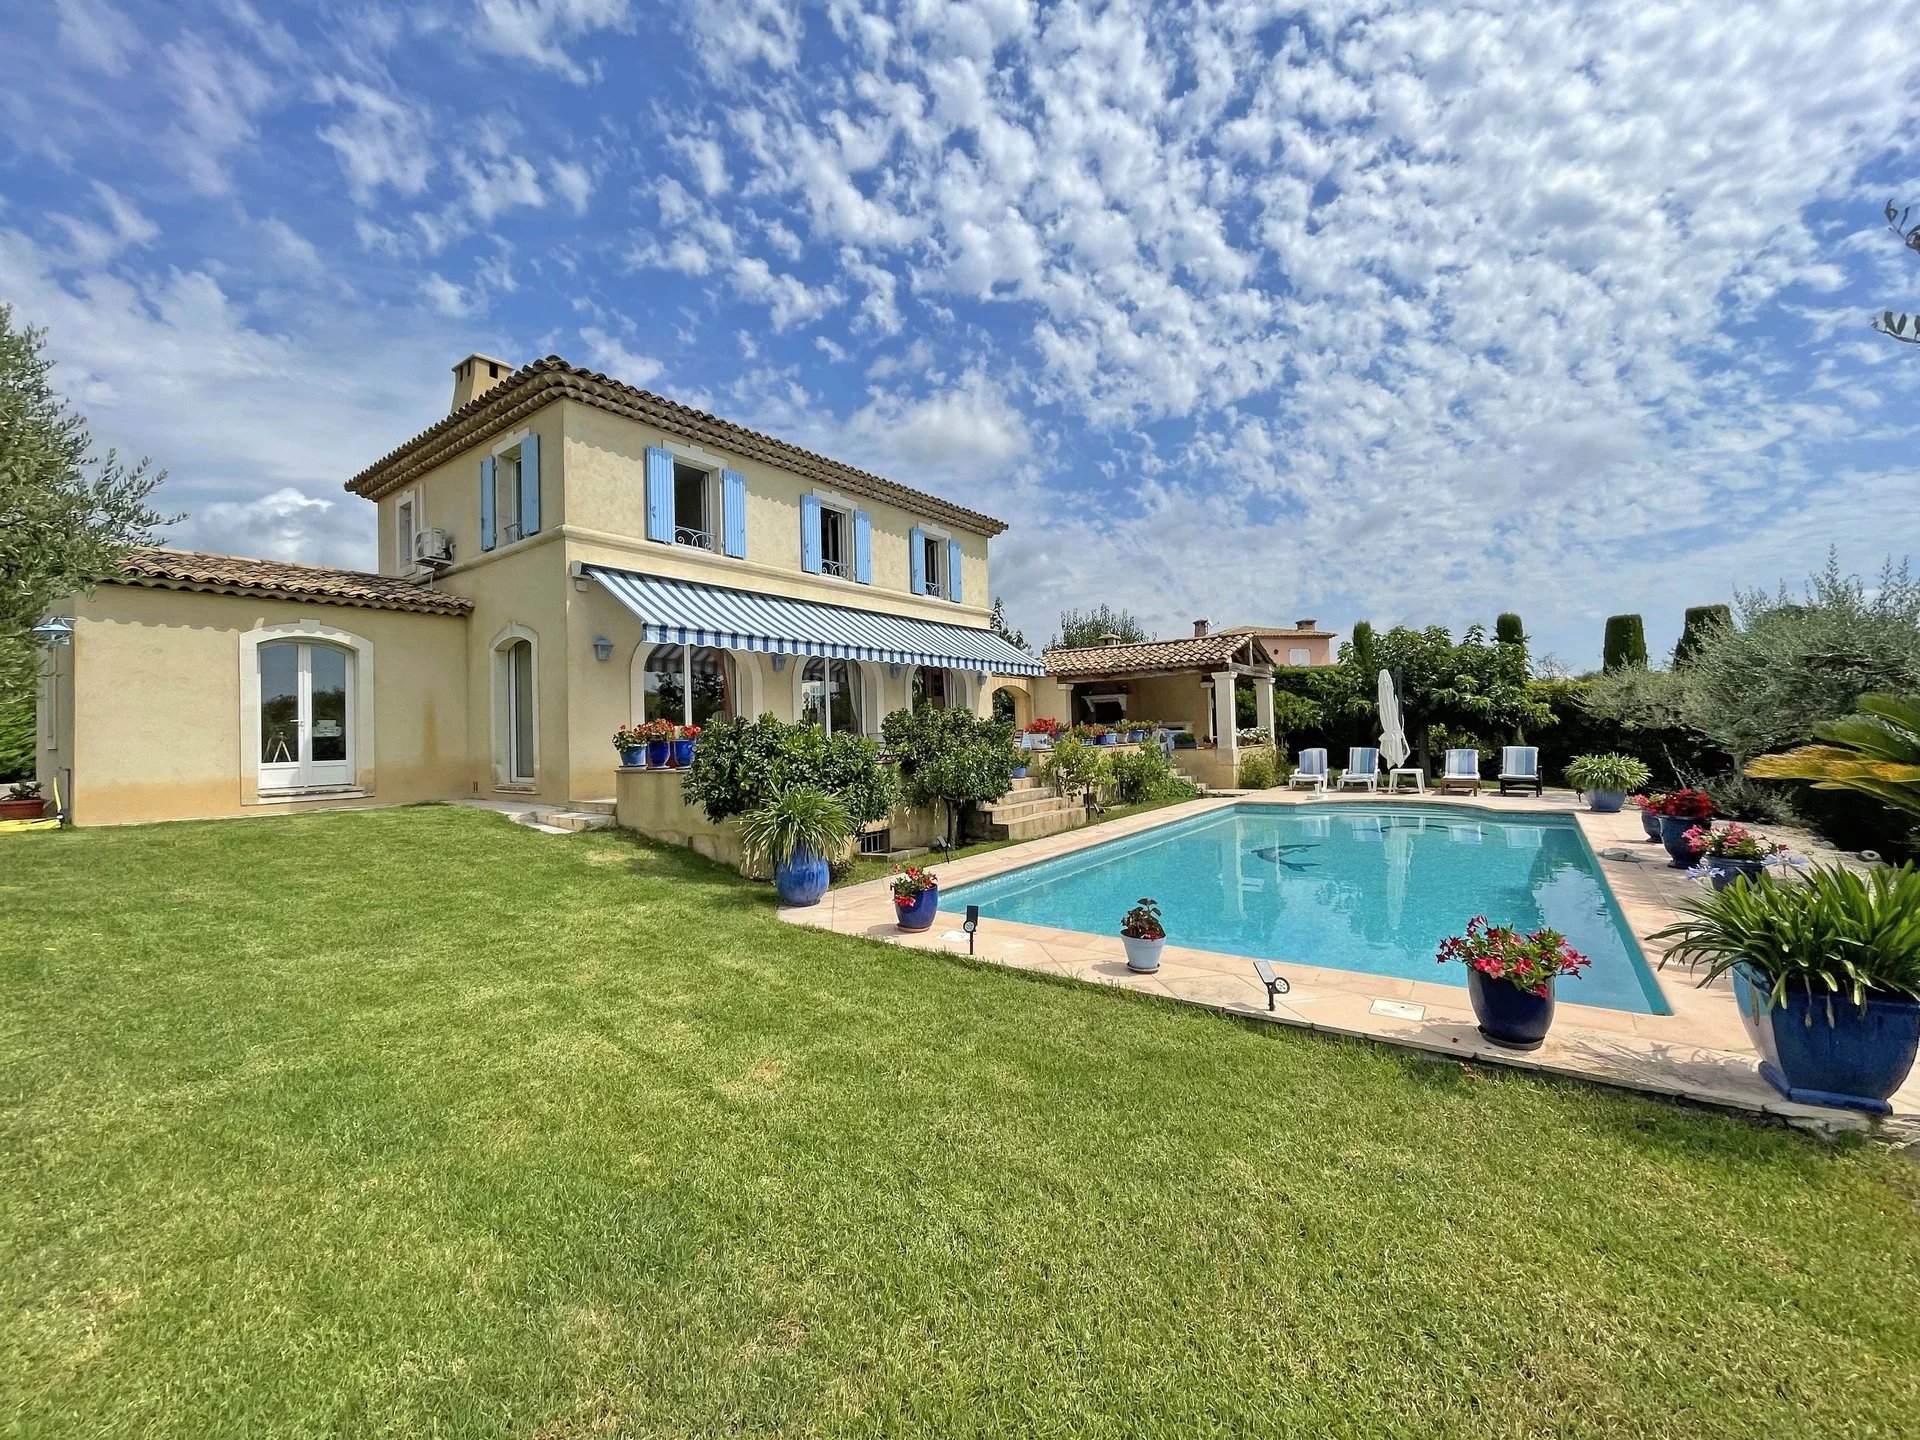 Beautiful villa with a big swimming pool